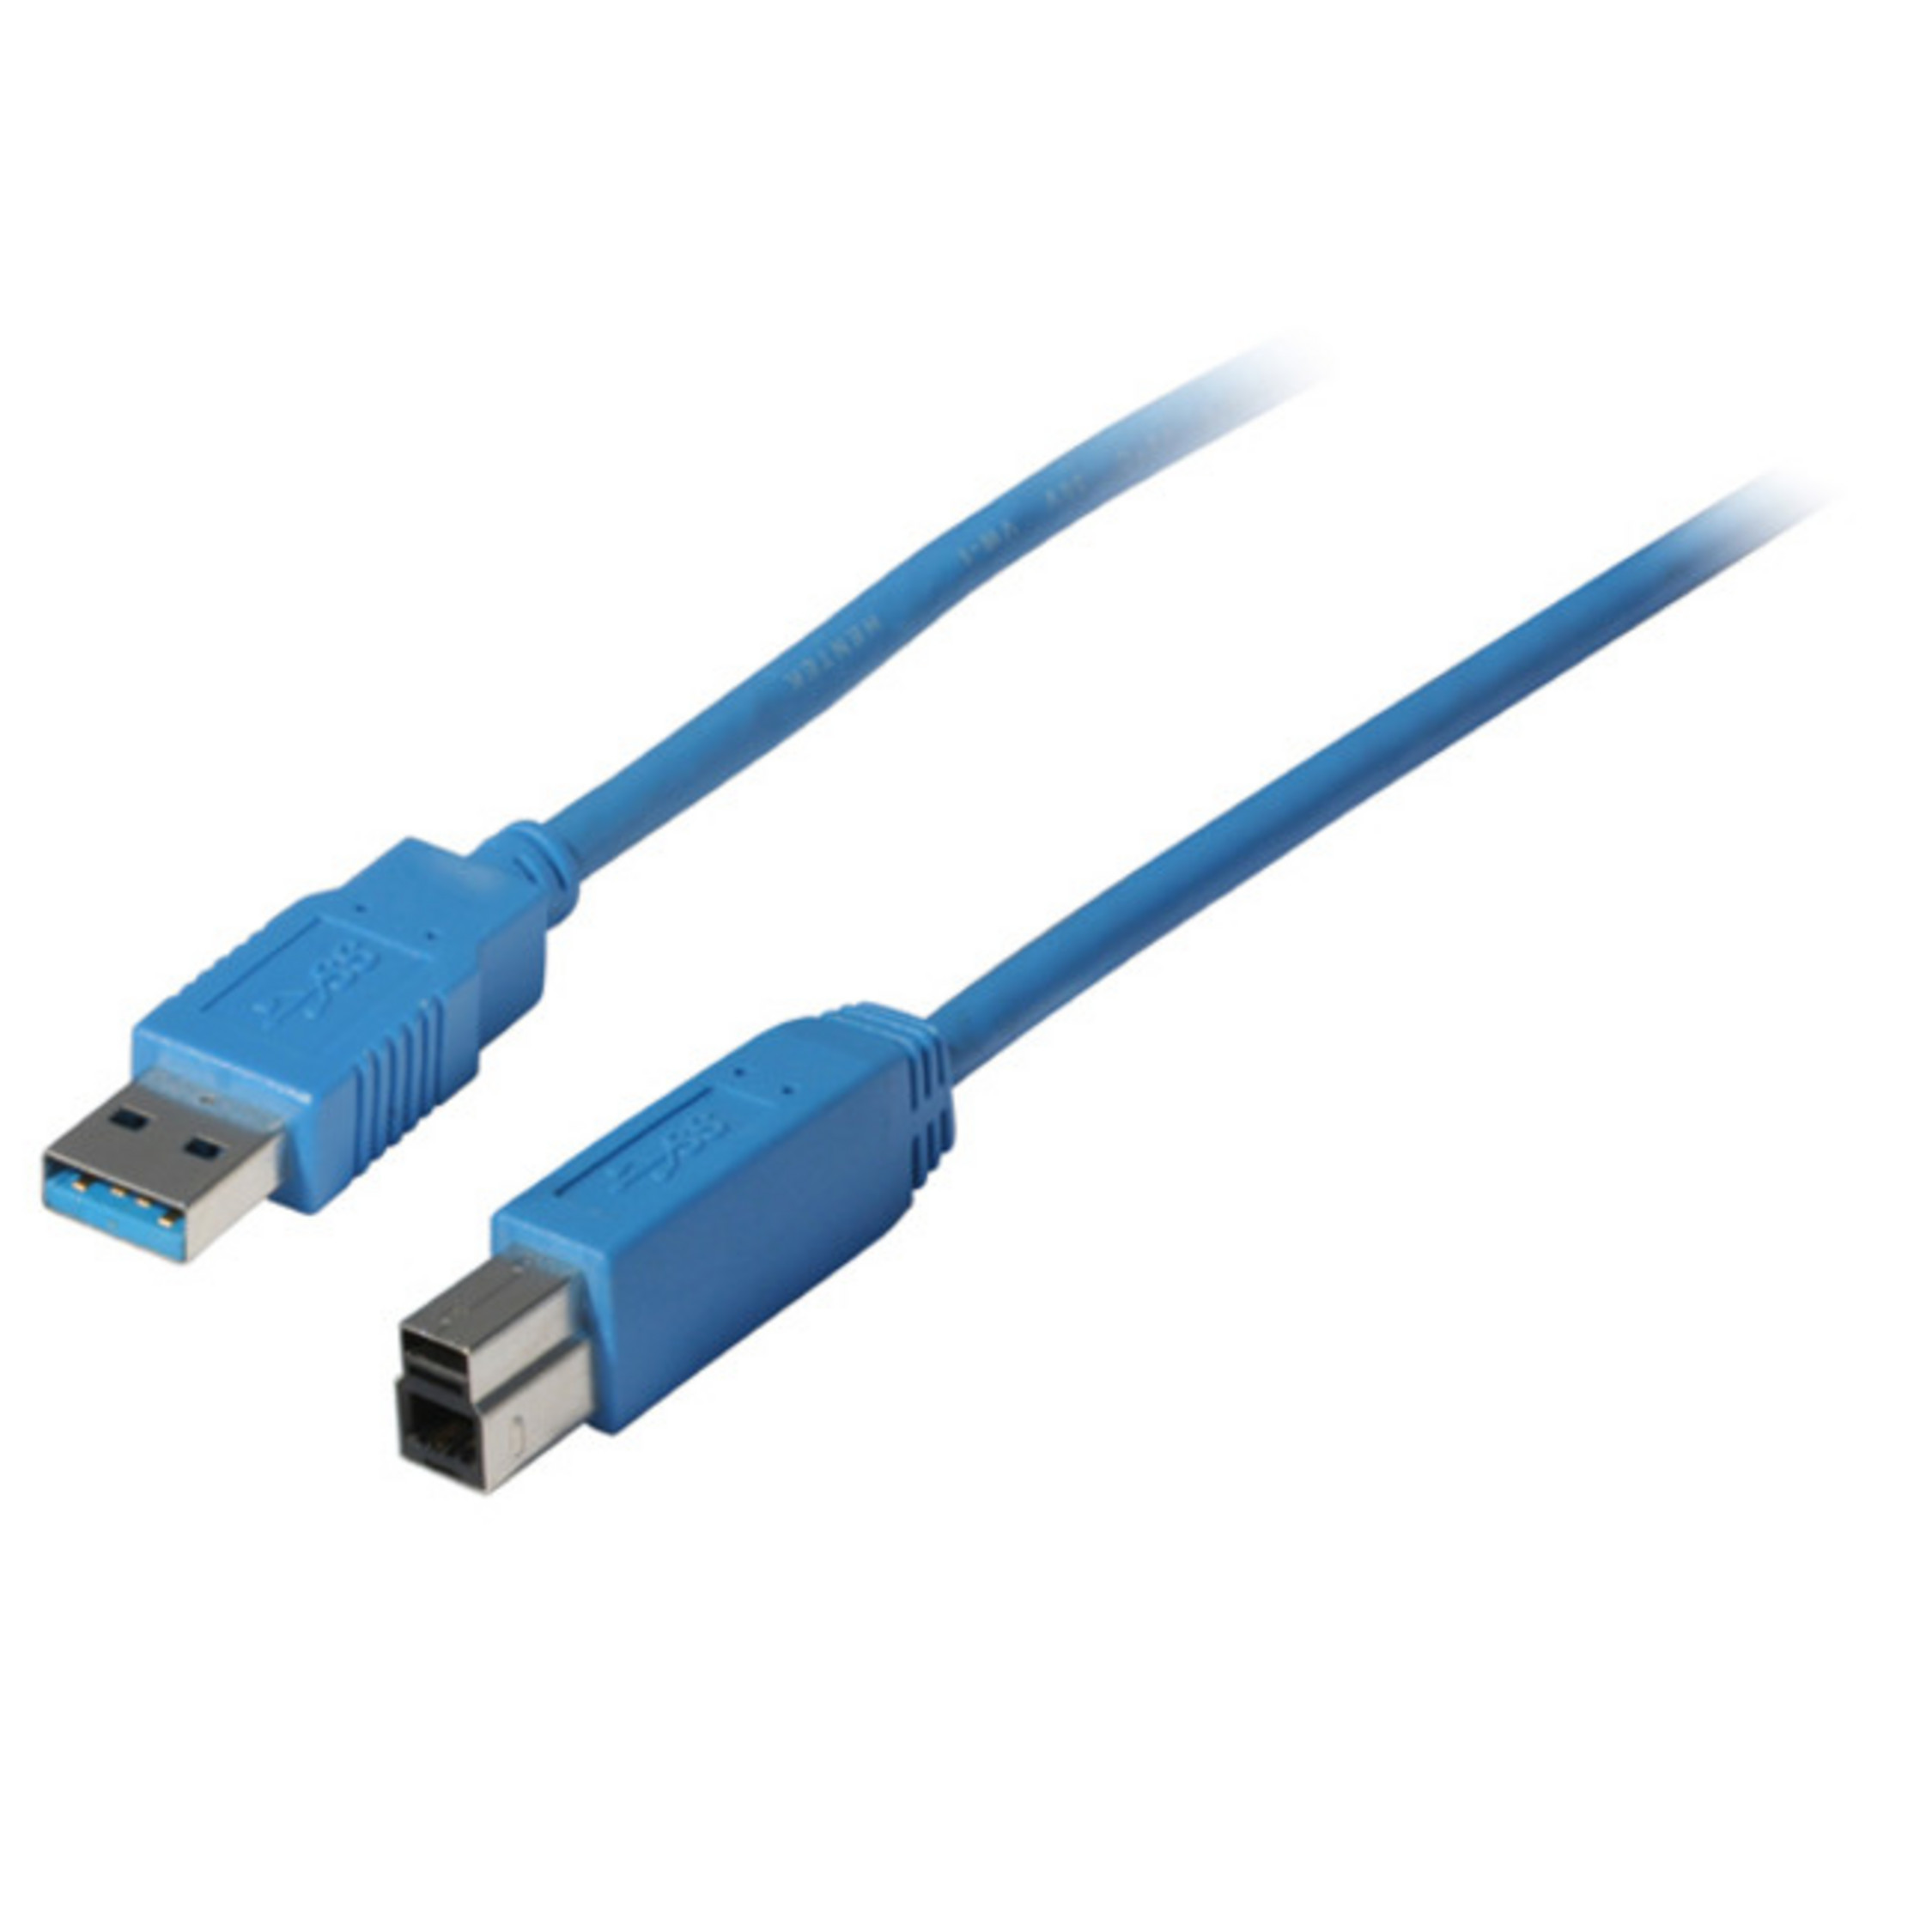 CONNECTIVITY B Kabel S/CONN USB A / MAXIMUM Stecker Stecker USB blau Kabel 3.0 USB 1,8m